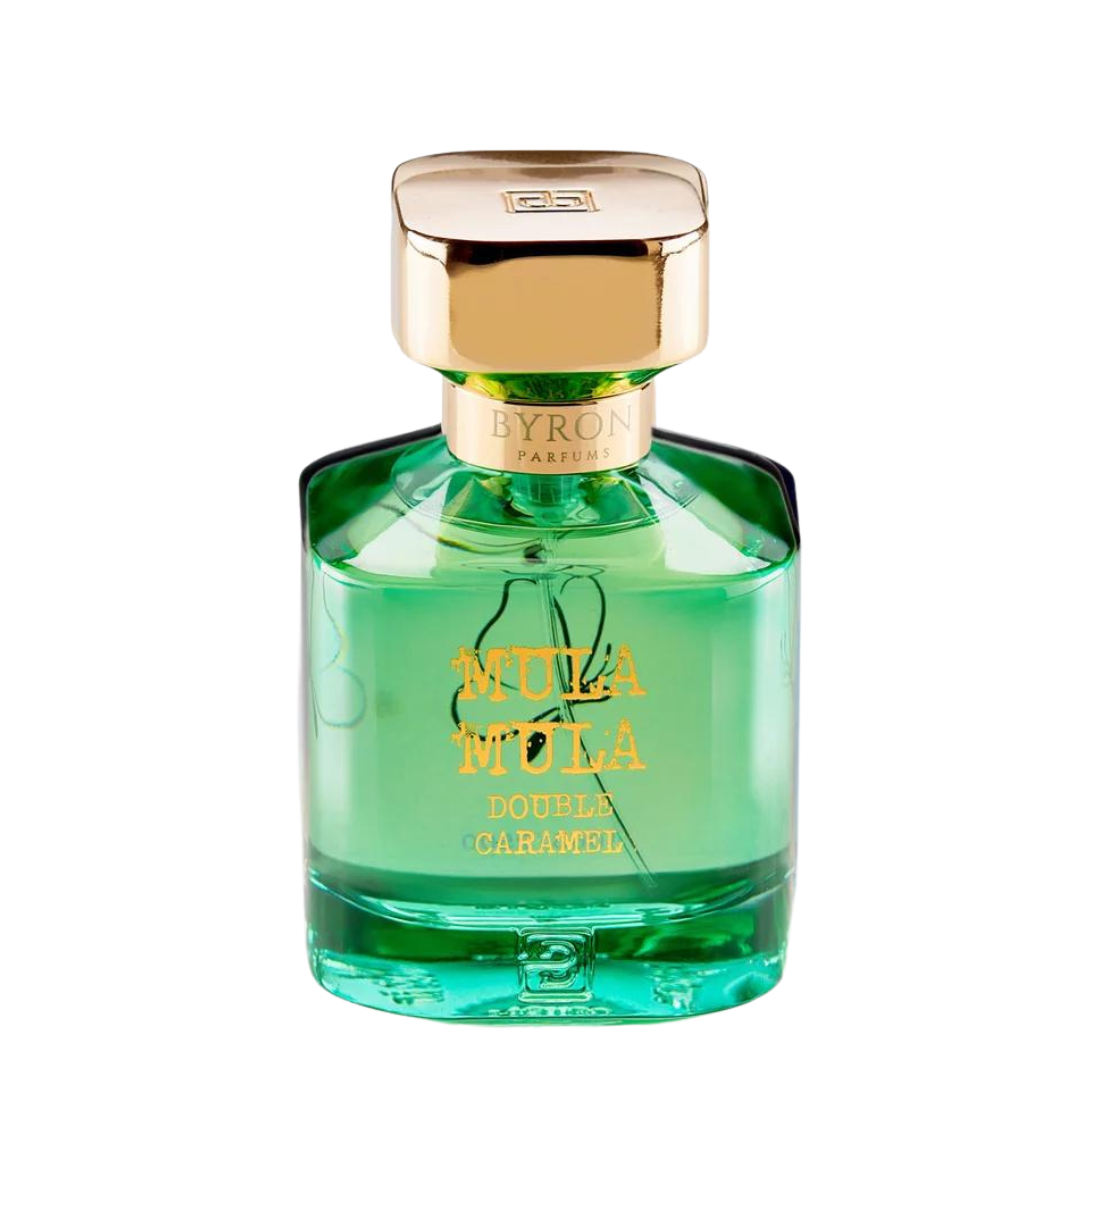 byron-parfums-mula-mula-double-caramel-limited-edition.png